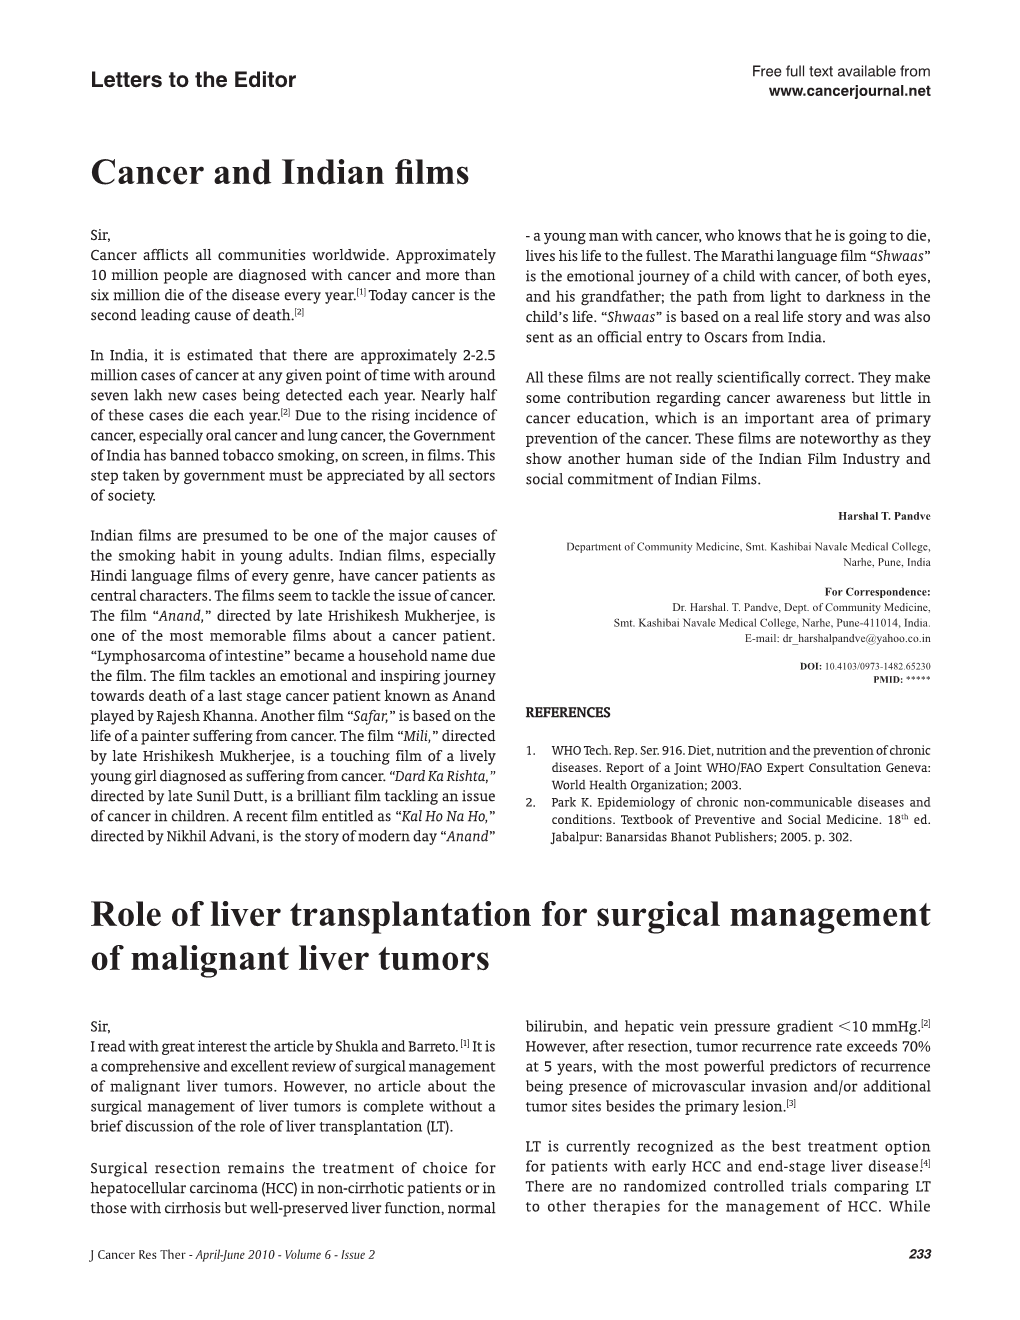 Cancer and Indian Films Role of Liver Transplantation For